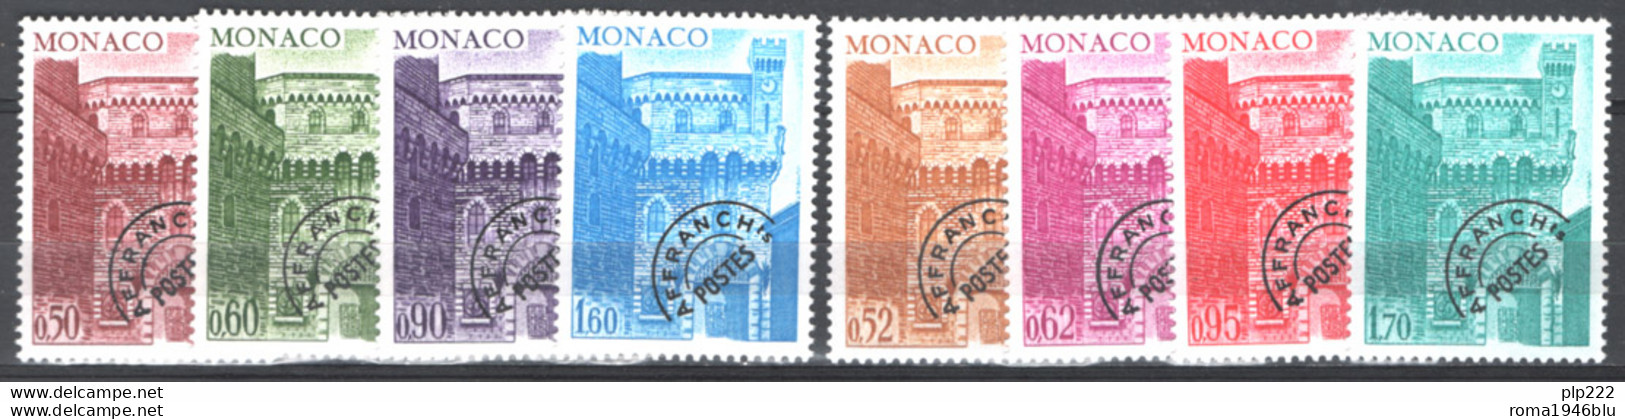 Monaco 1976 Annata Completa Con Preann / Complete Year Set With Precancel **/MNH VF - Années Complètes